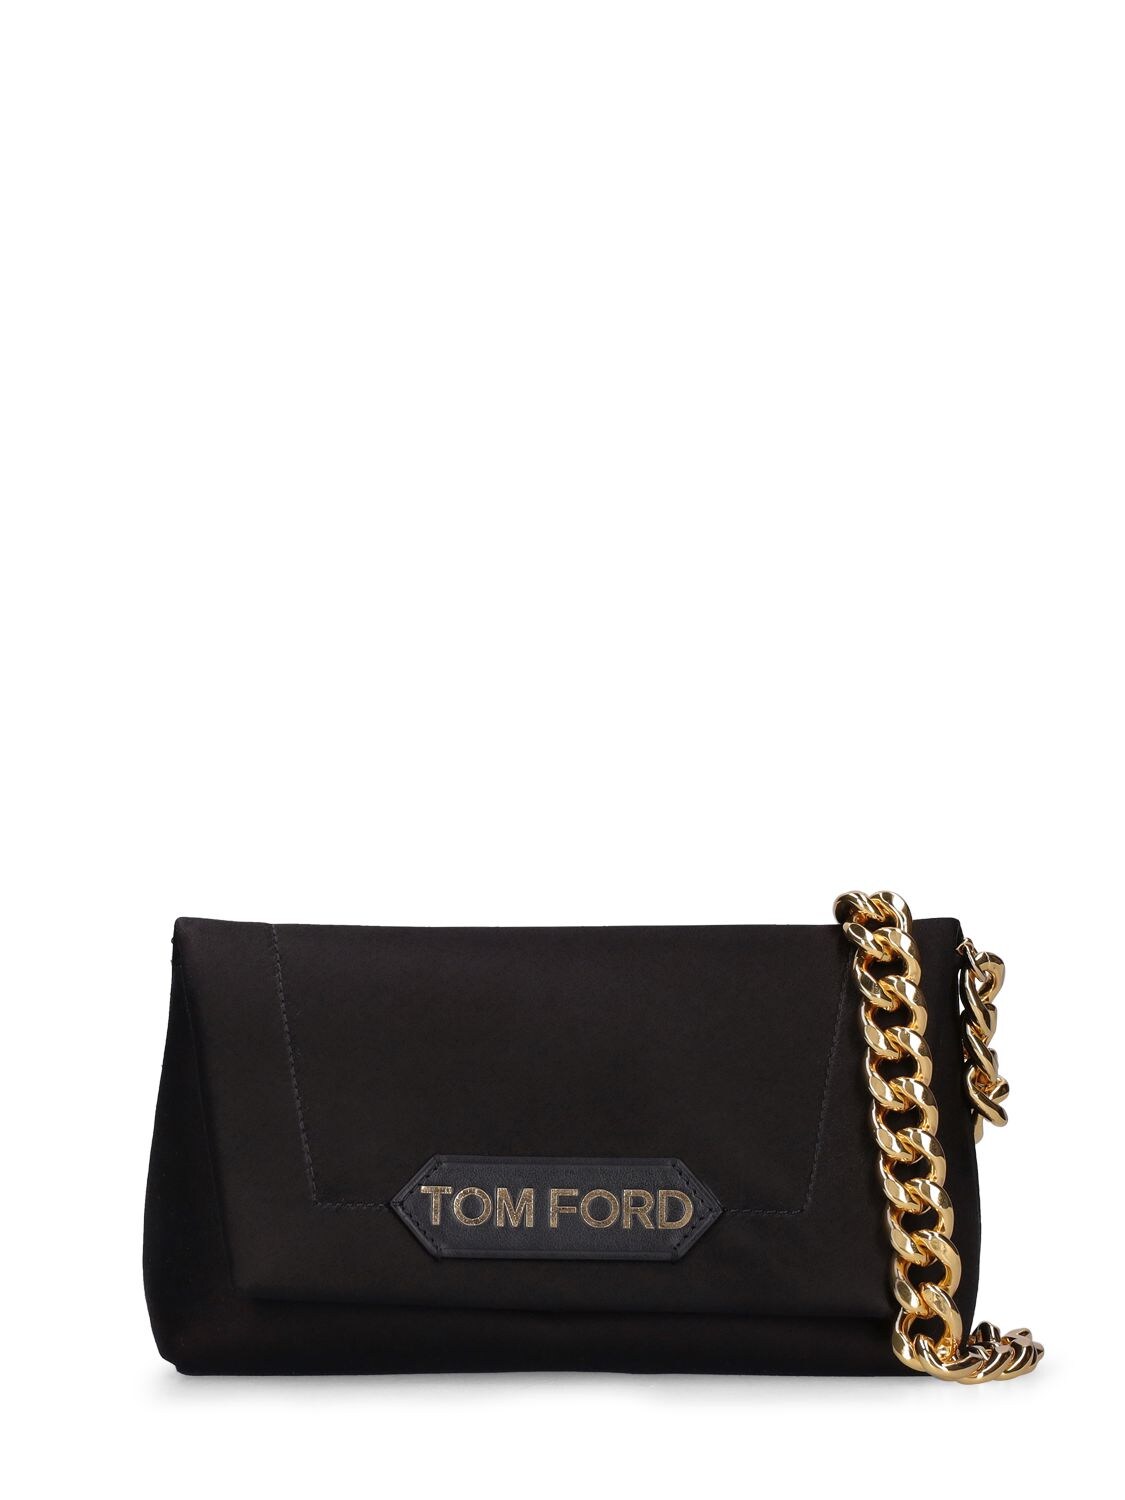 TOM FORD Label Mini Satin Chain Shoulder Bag